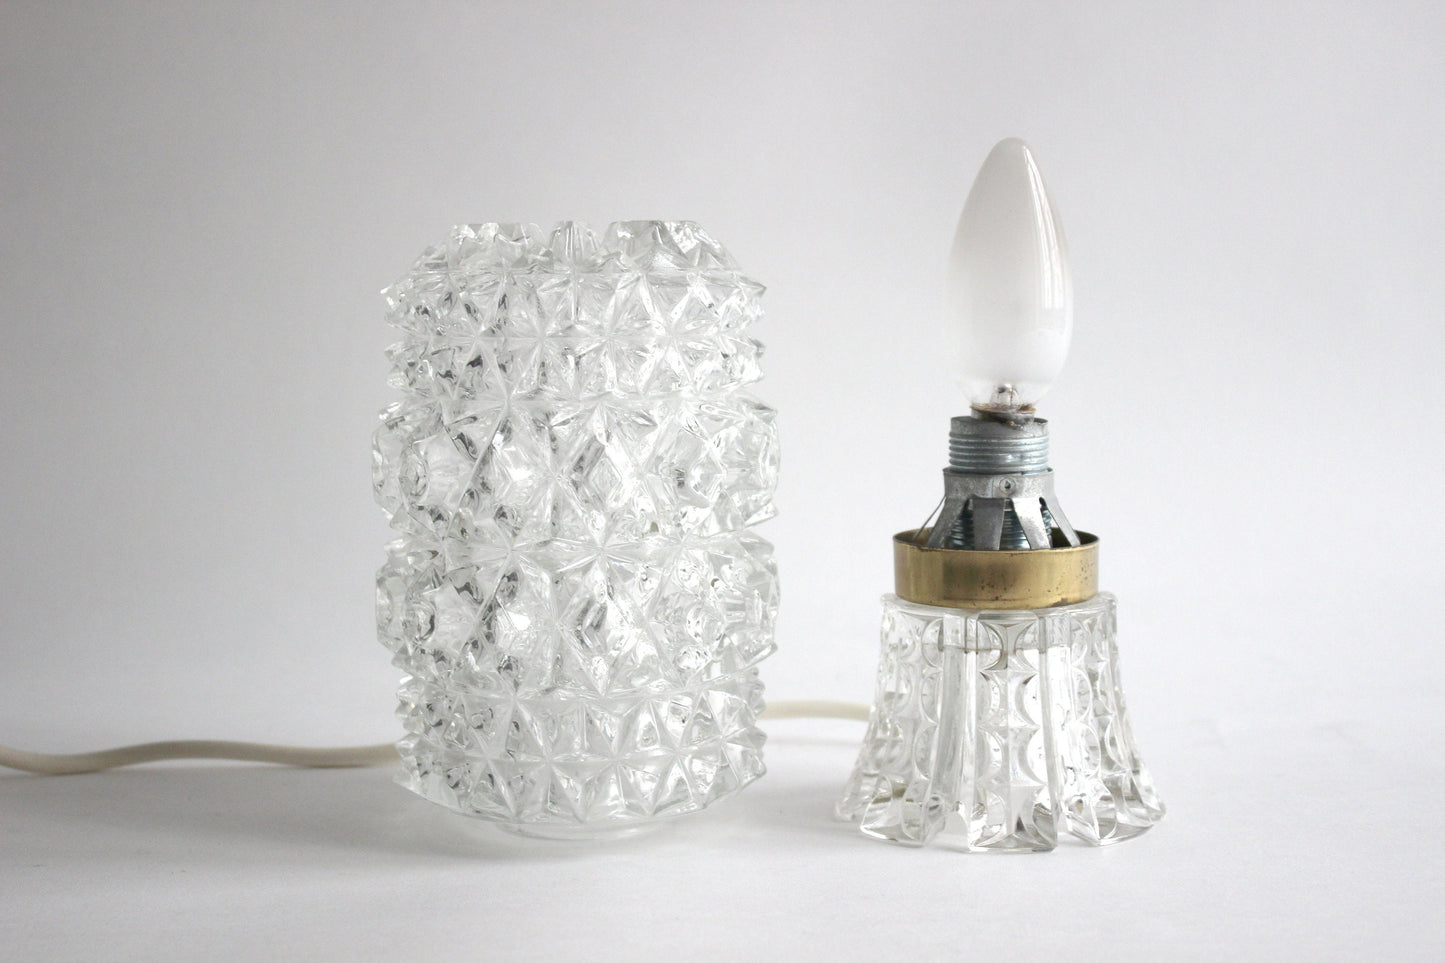 Hillebrand Pineapple 50s glass bedside lamp Mid century design